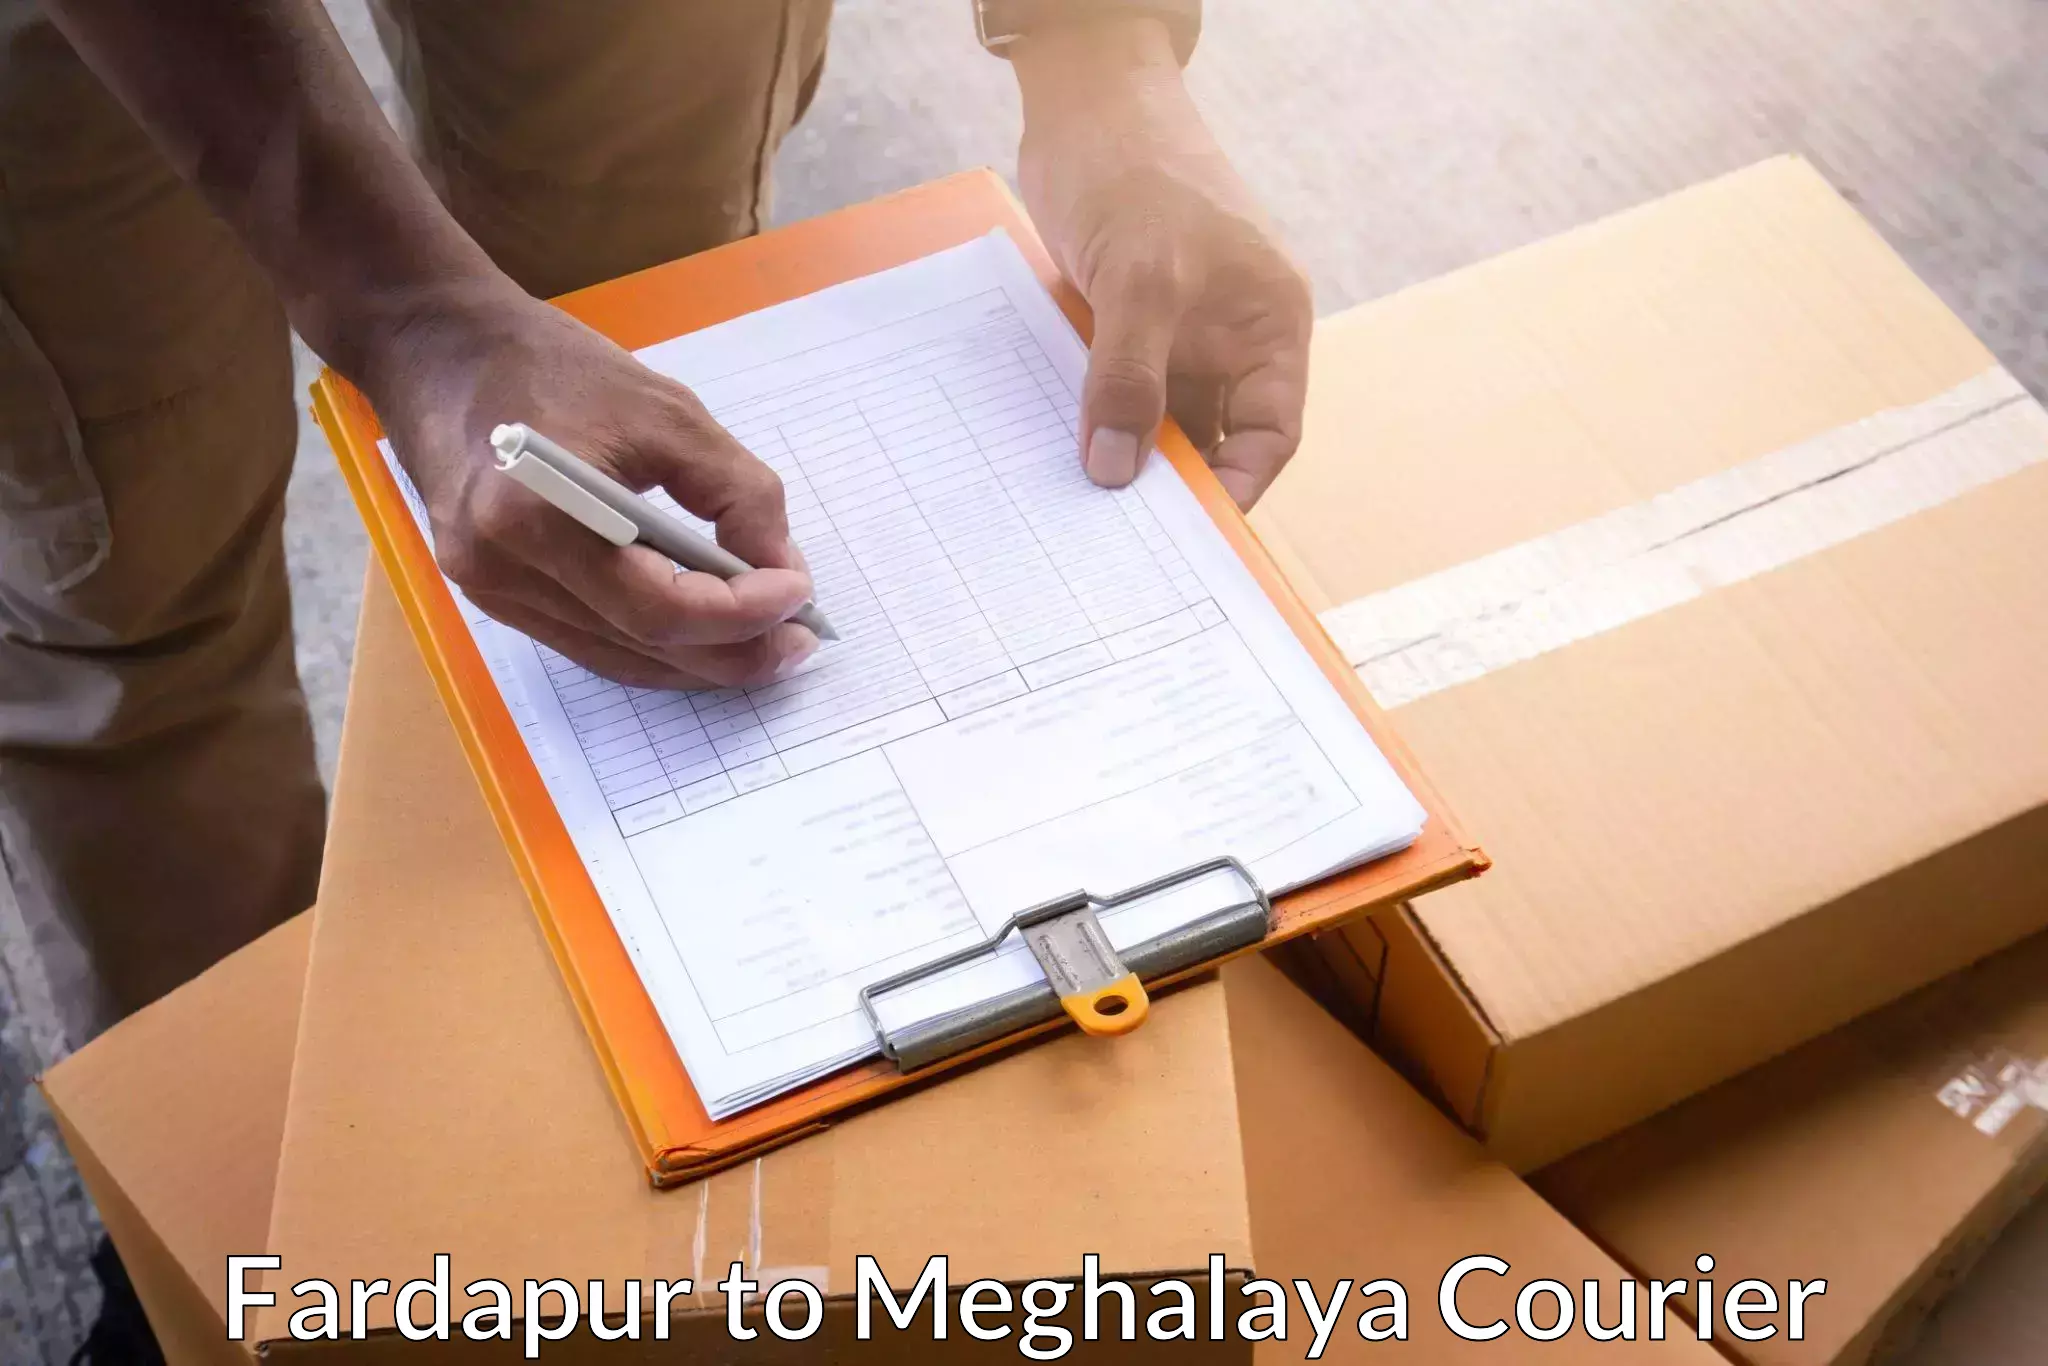 Urgent courier needs Fardapur to Umsaw